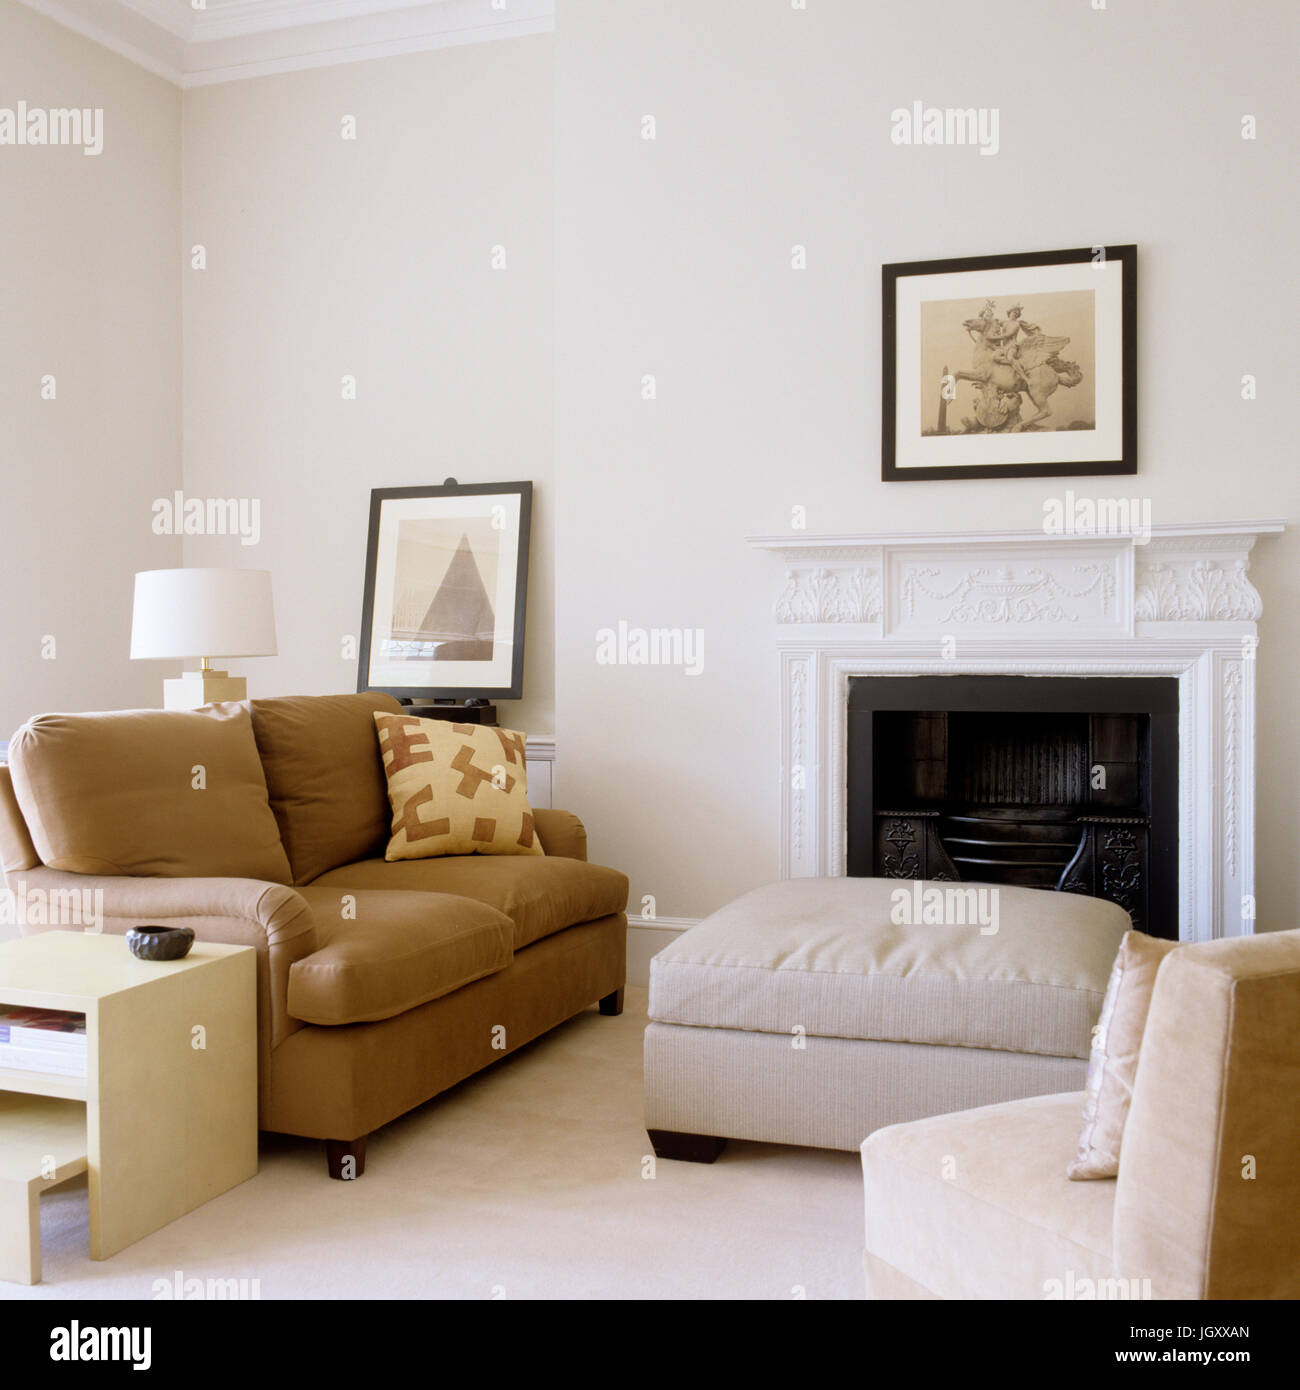 Minimalist style living room Stock Photo